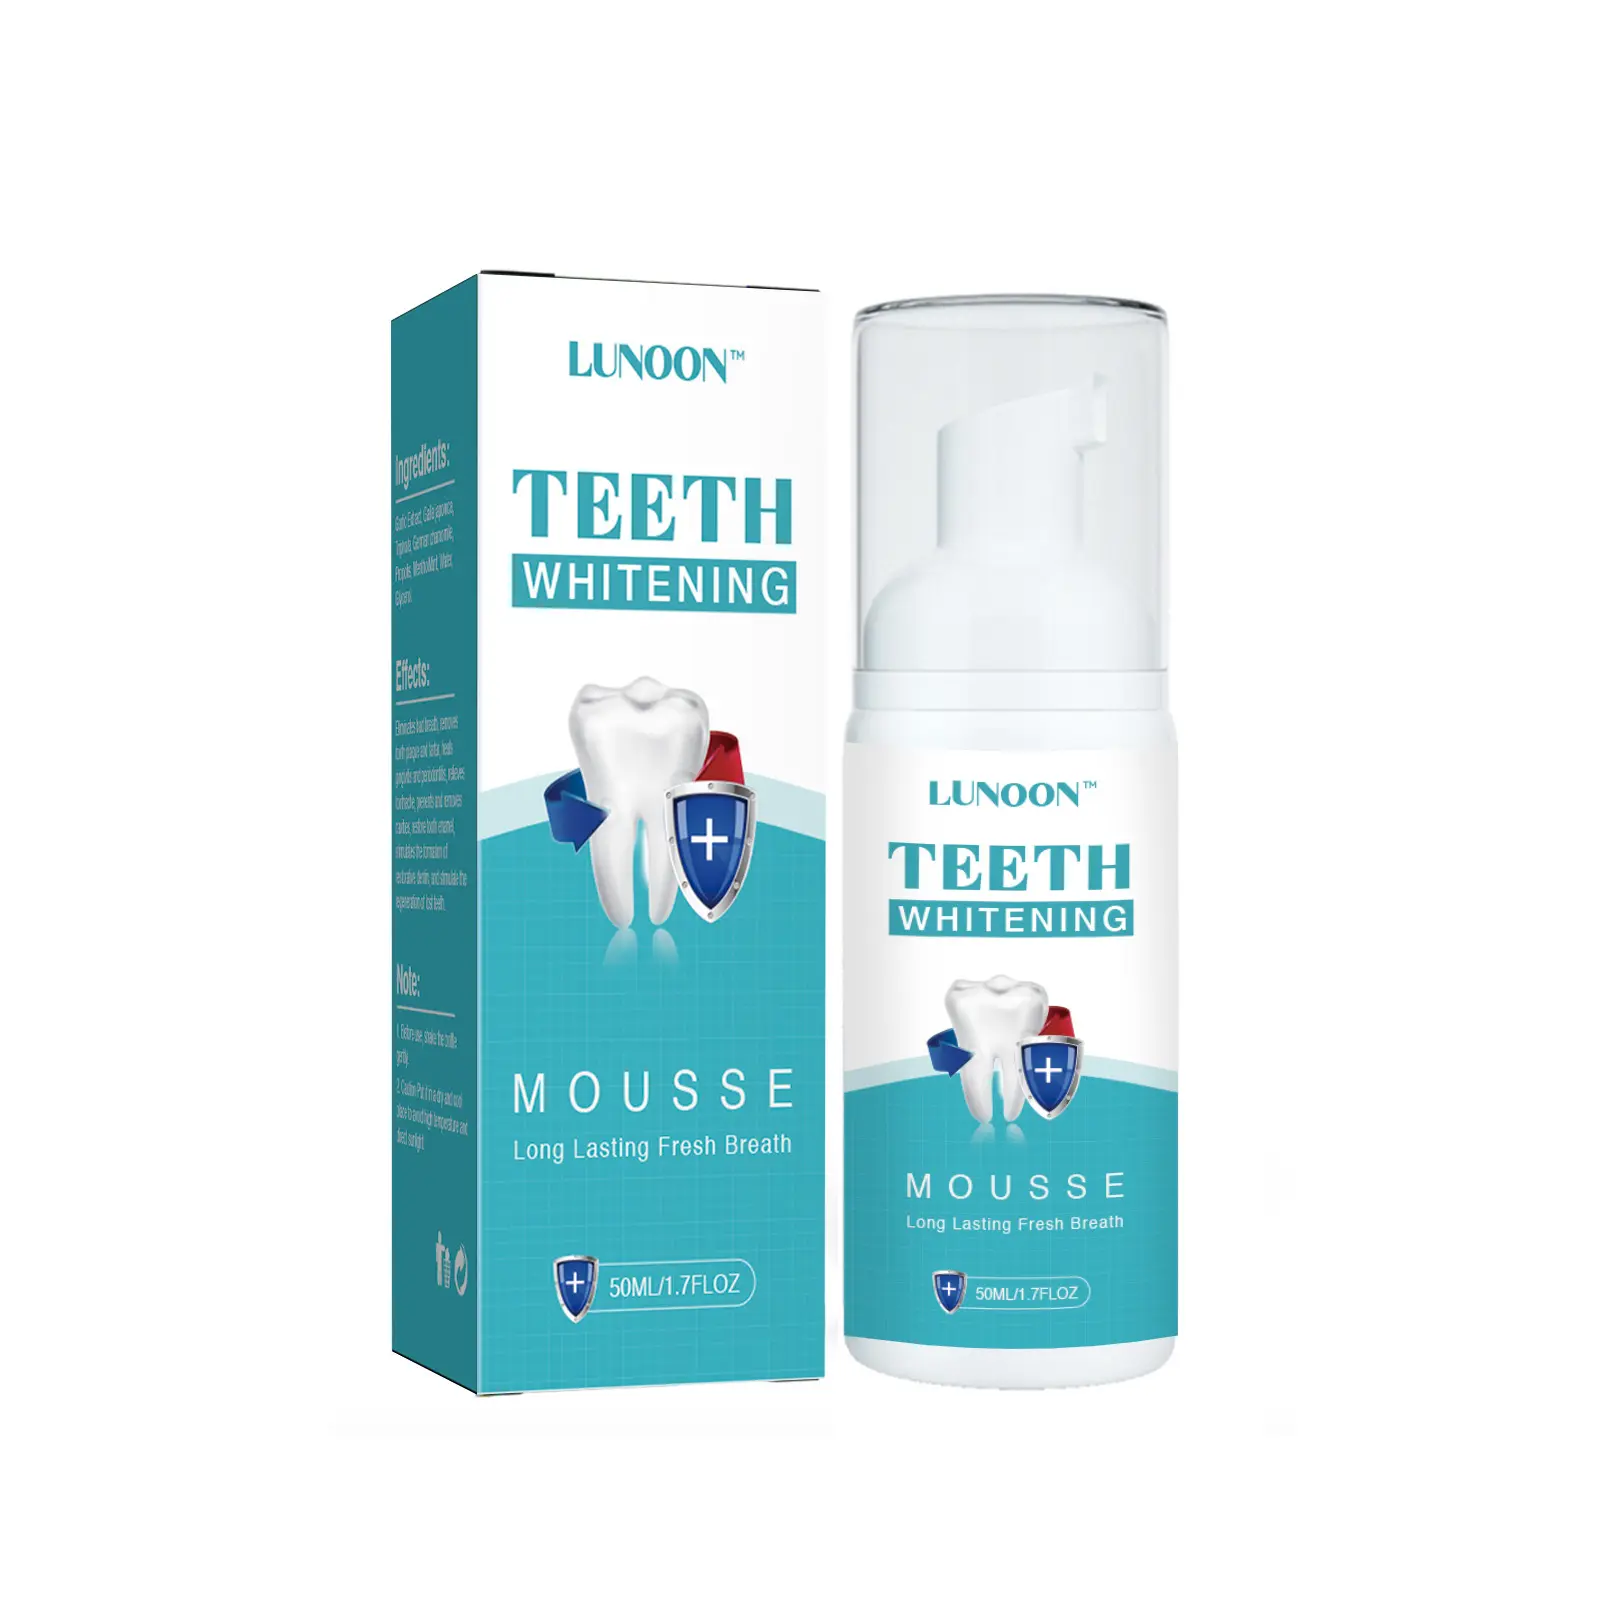 दांत Whitening मूस टूथपेस्ट दंत मौखिक स्वच्छता दाग को दूर पट्टिका दांत सफाई दांत सफेद उपकरण नई संस्करण